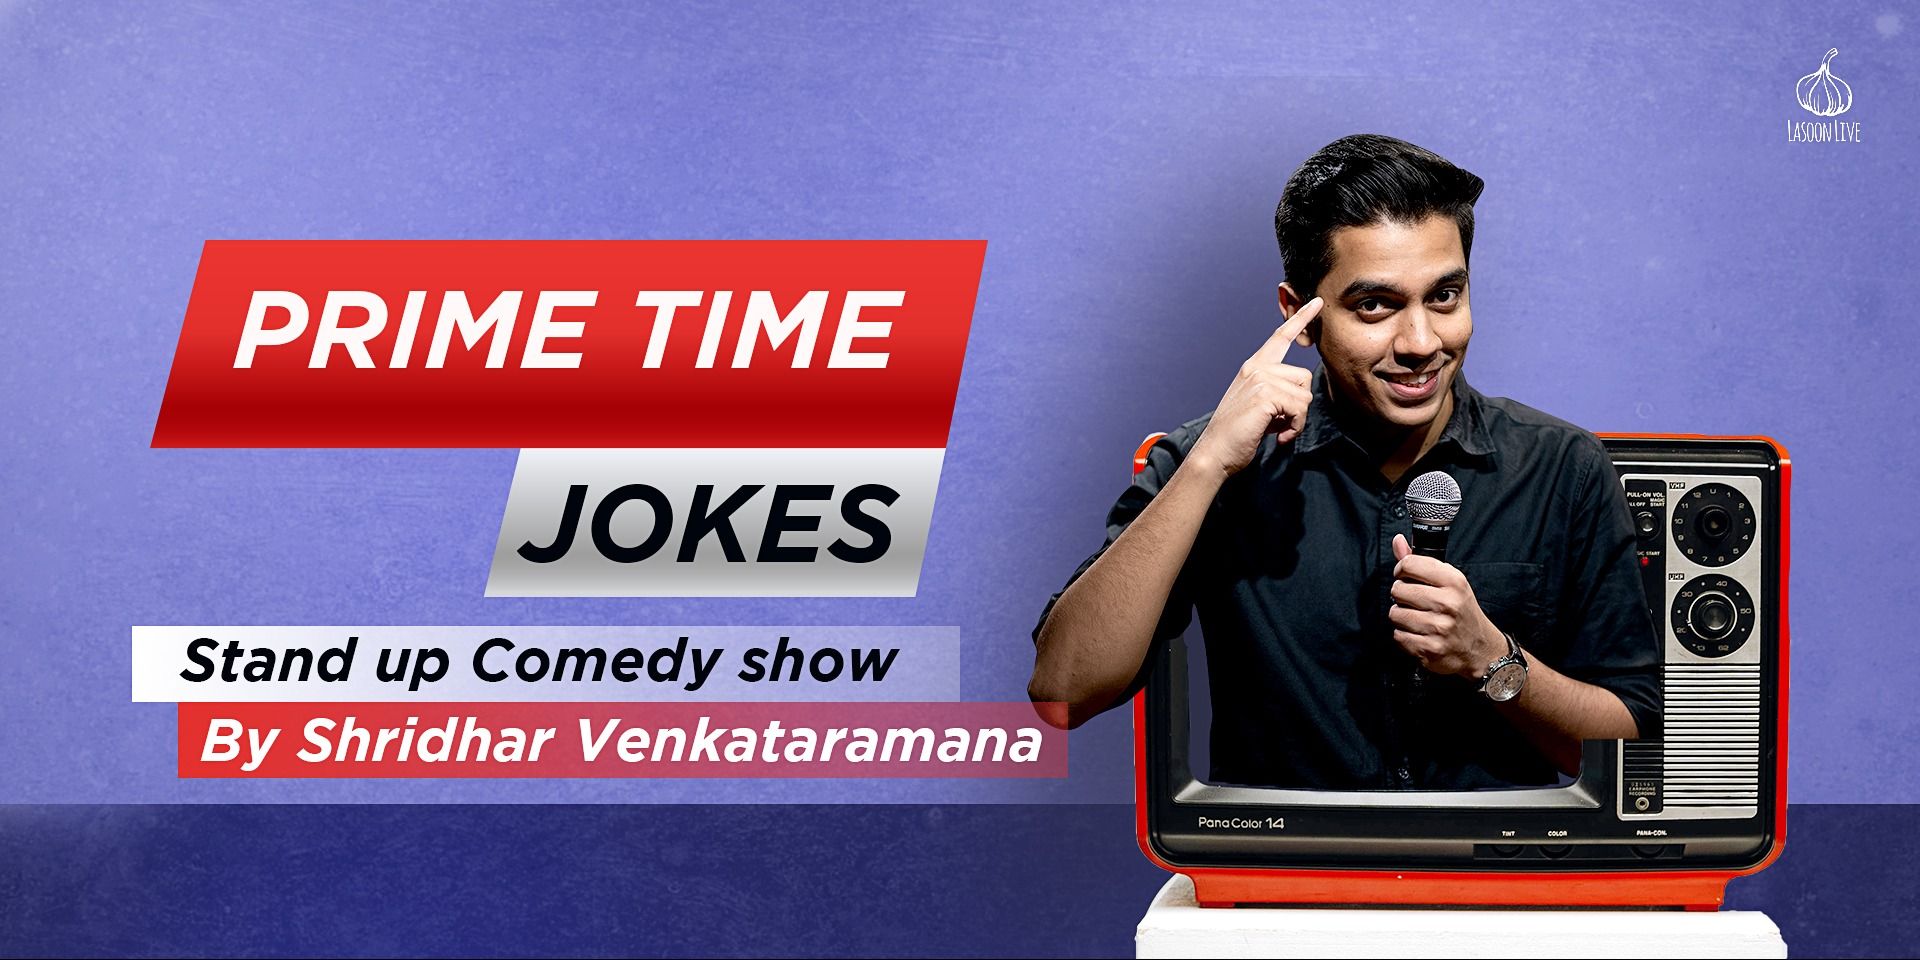 Prime Time Jokes – Shridhar Venkataramana (Comedy) in Chennai